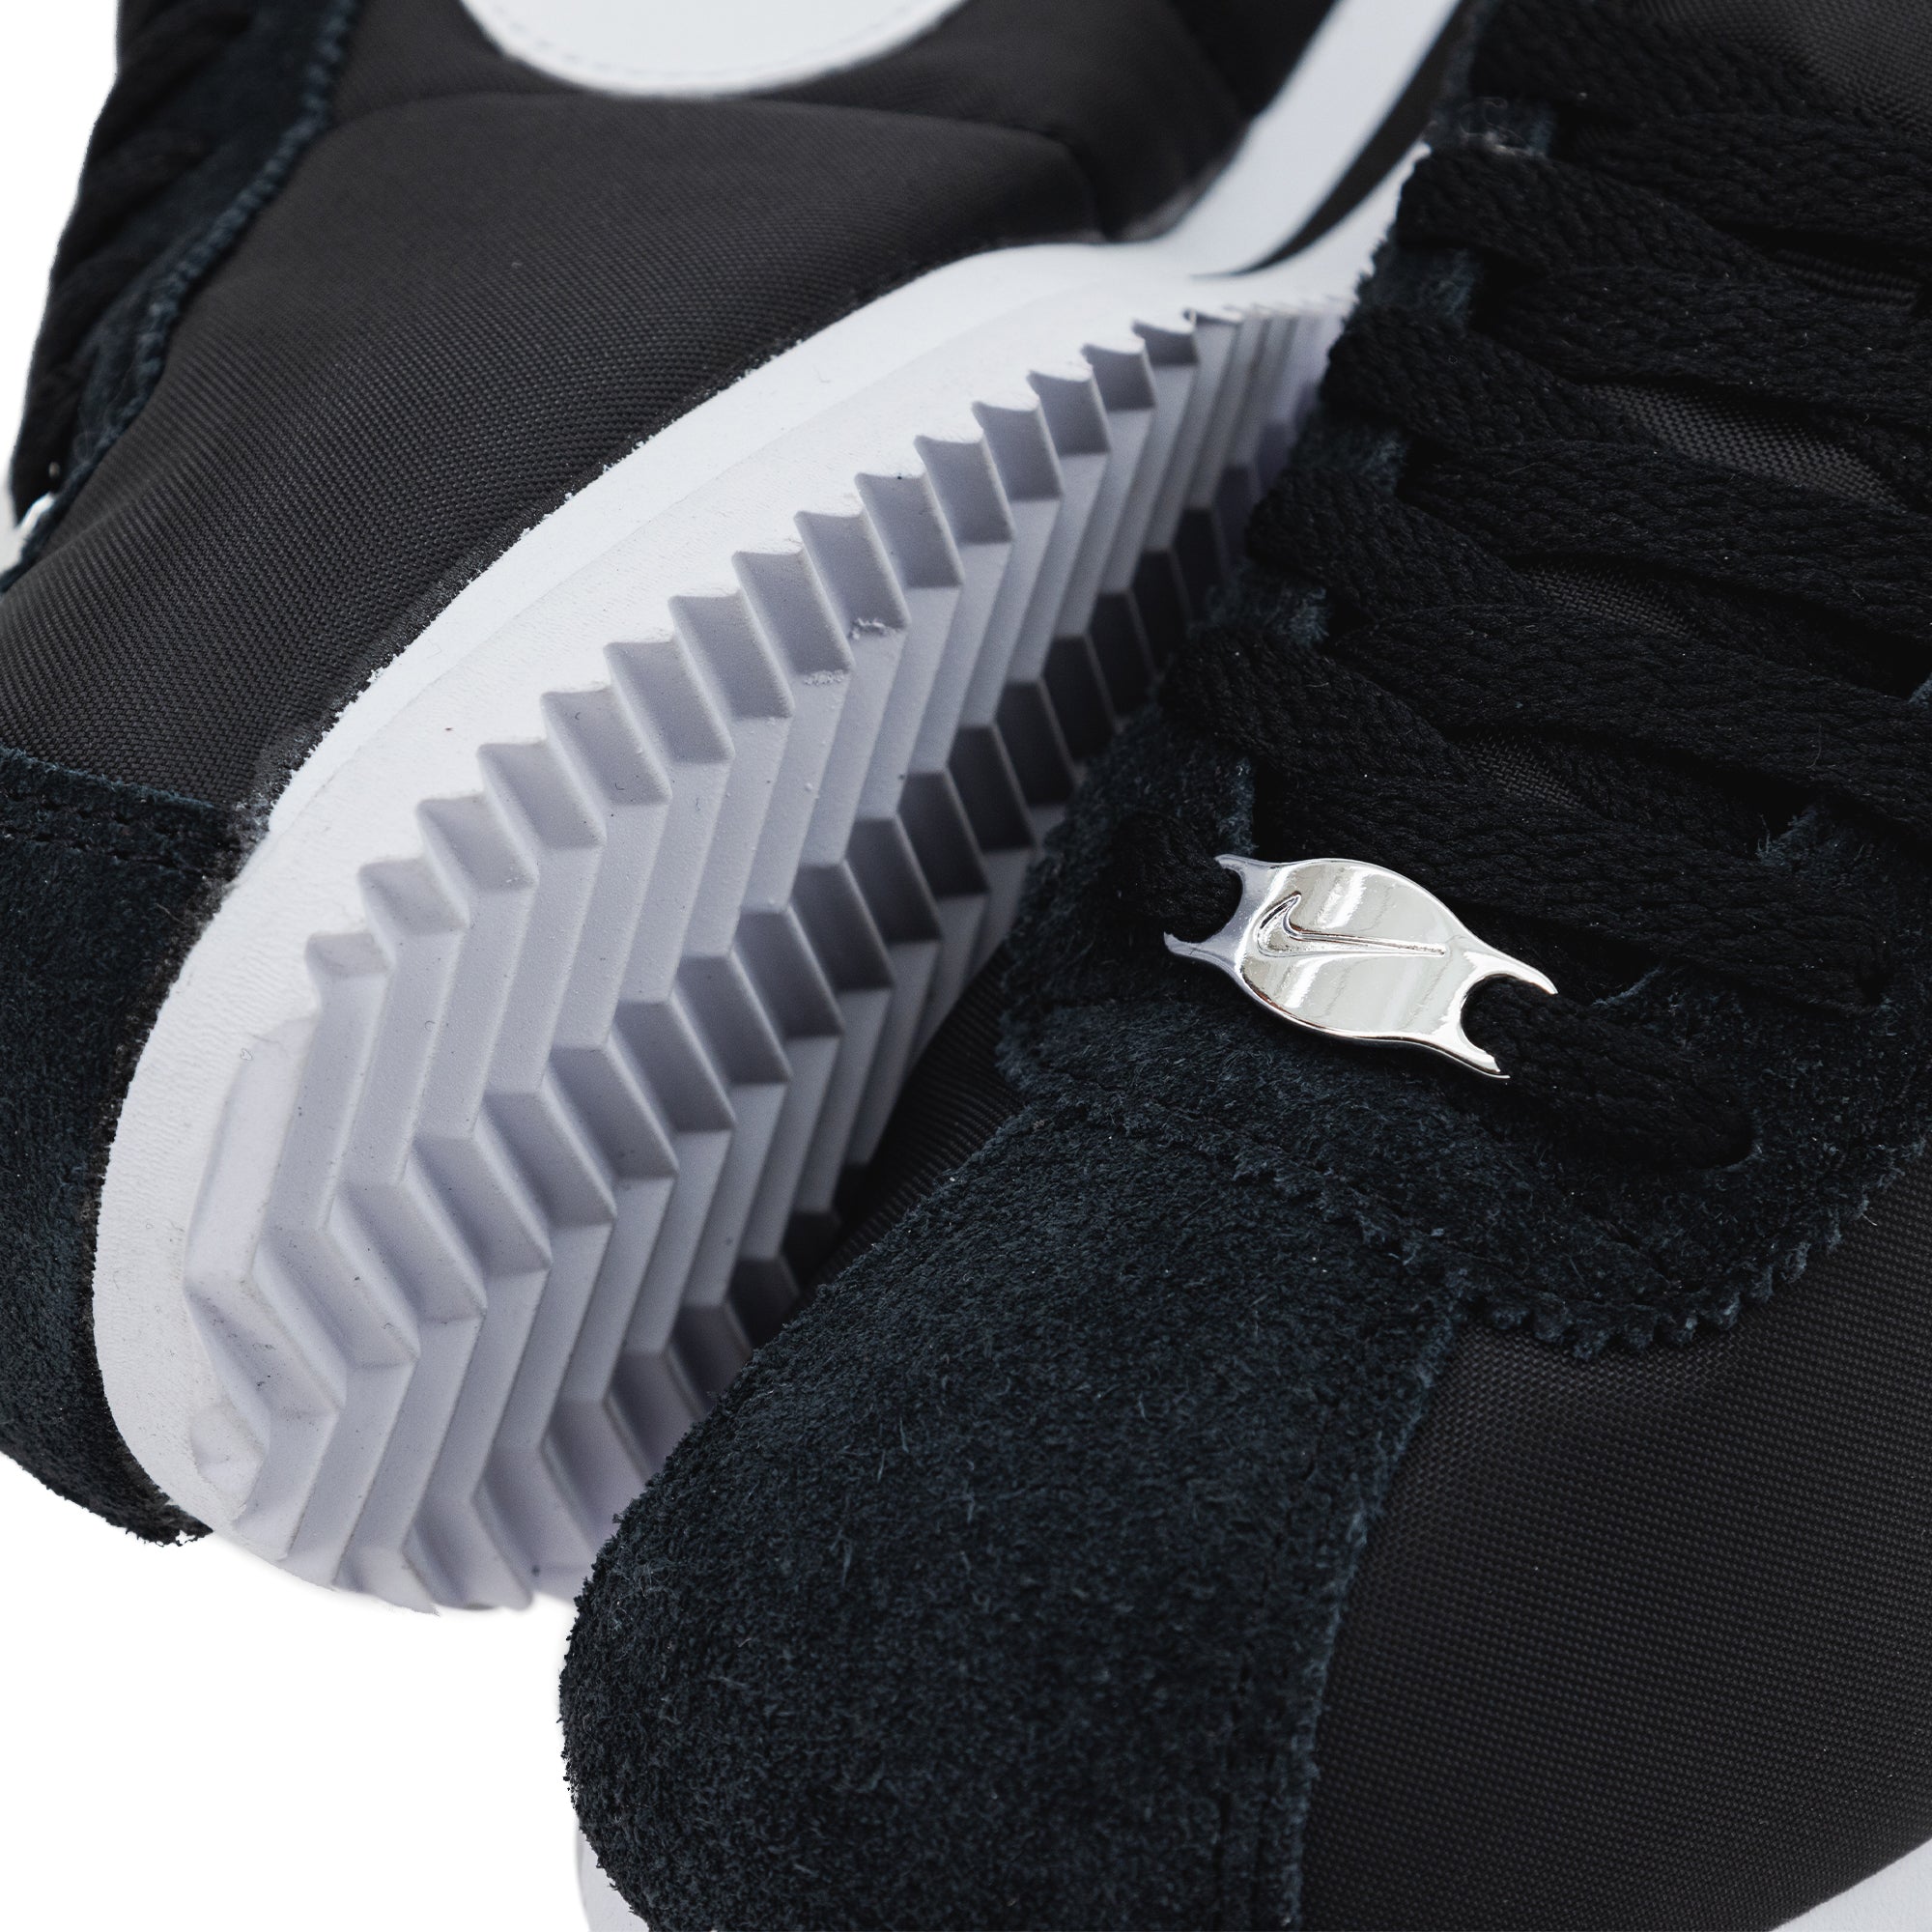 Nike Cortez Black White DZ2795-001